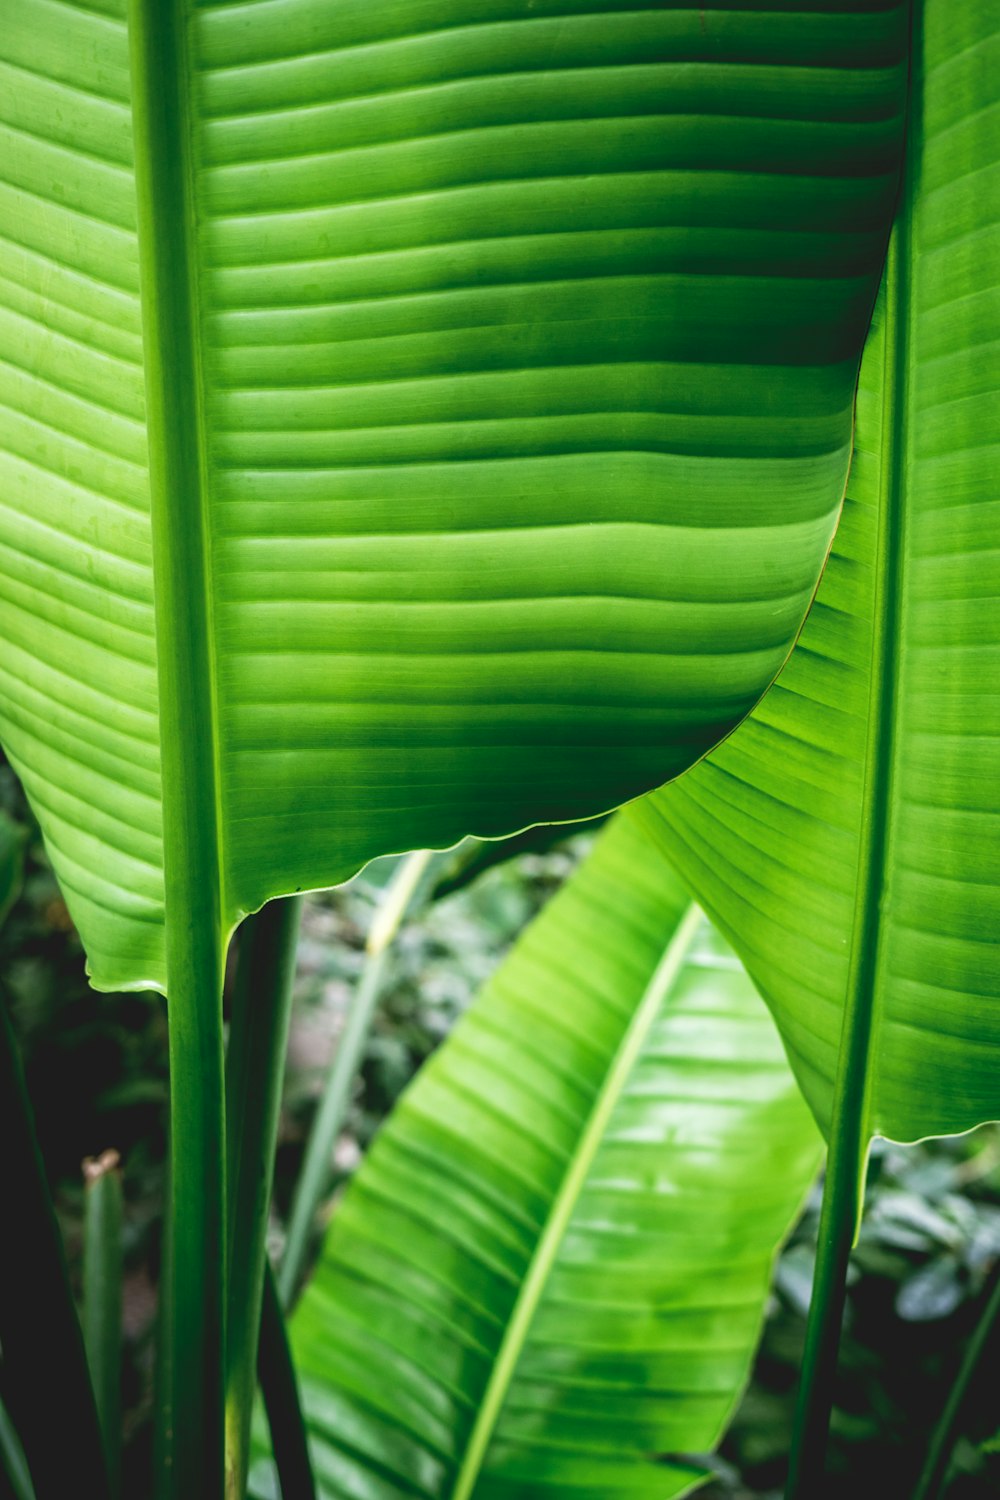 selective focus photo of green banana leaves